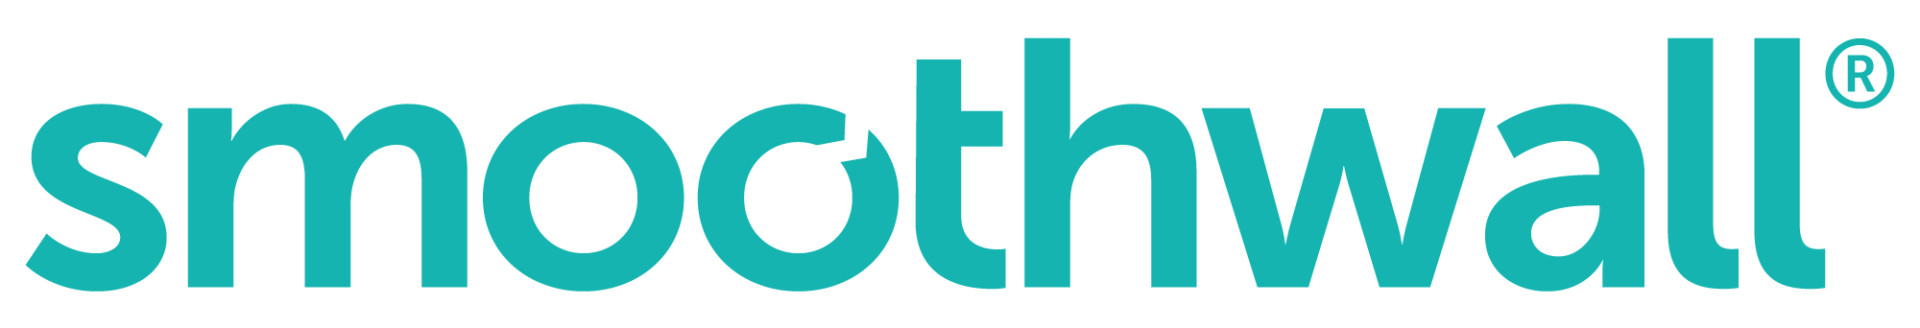 Smoothwall-logo-teal